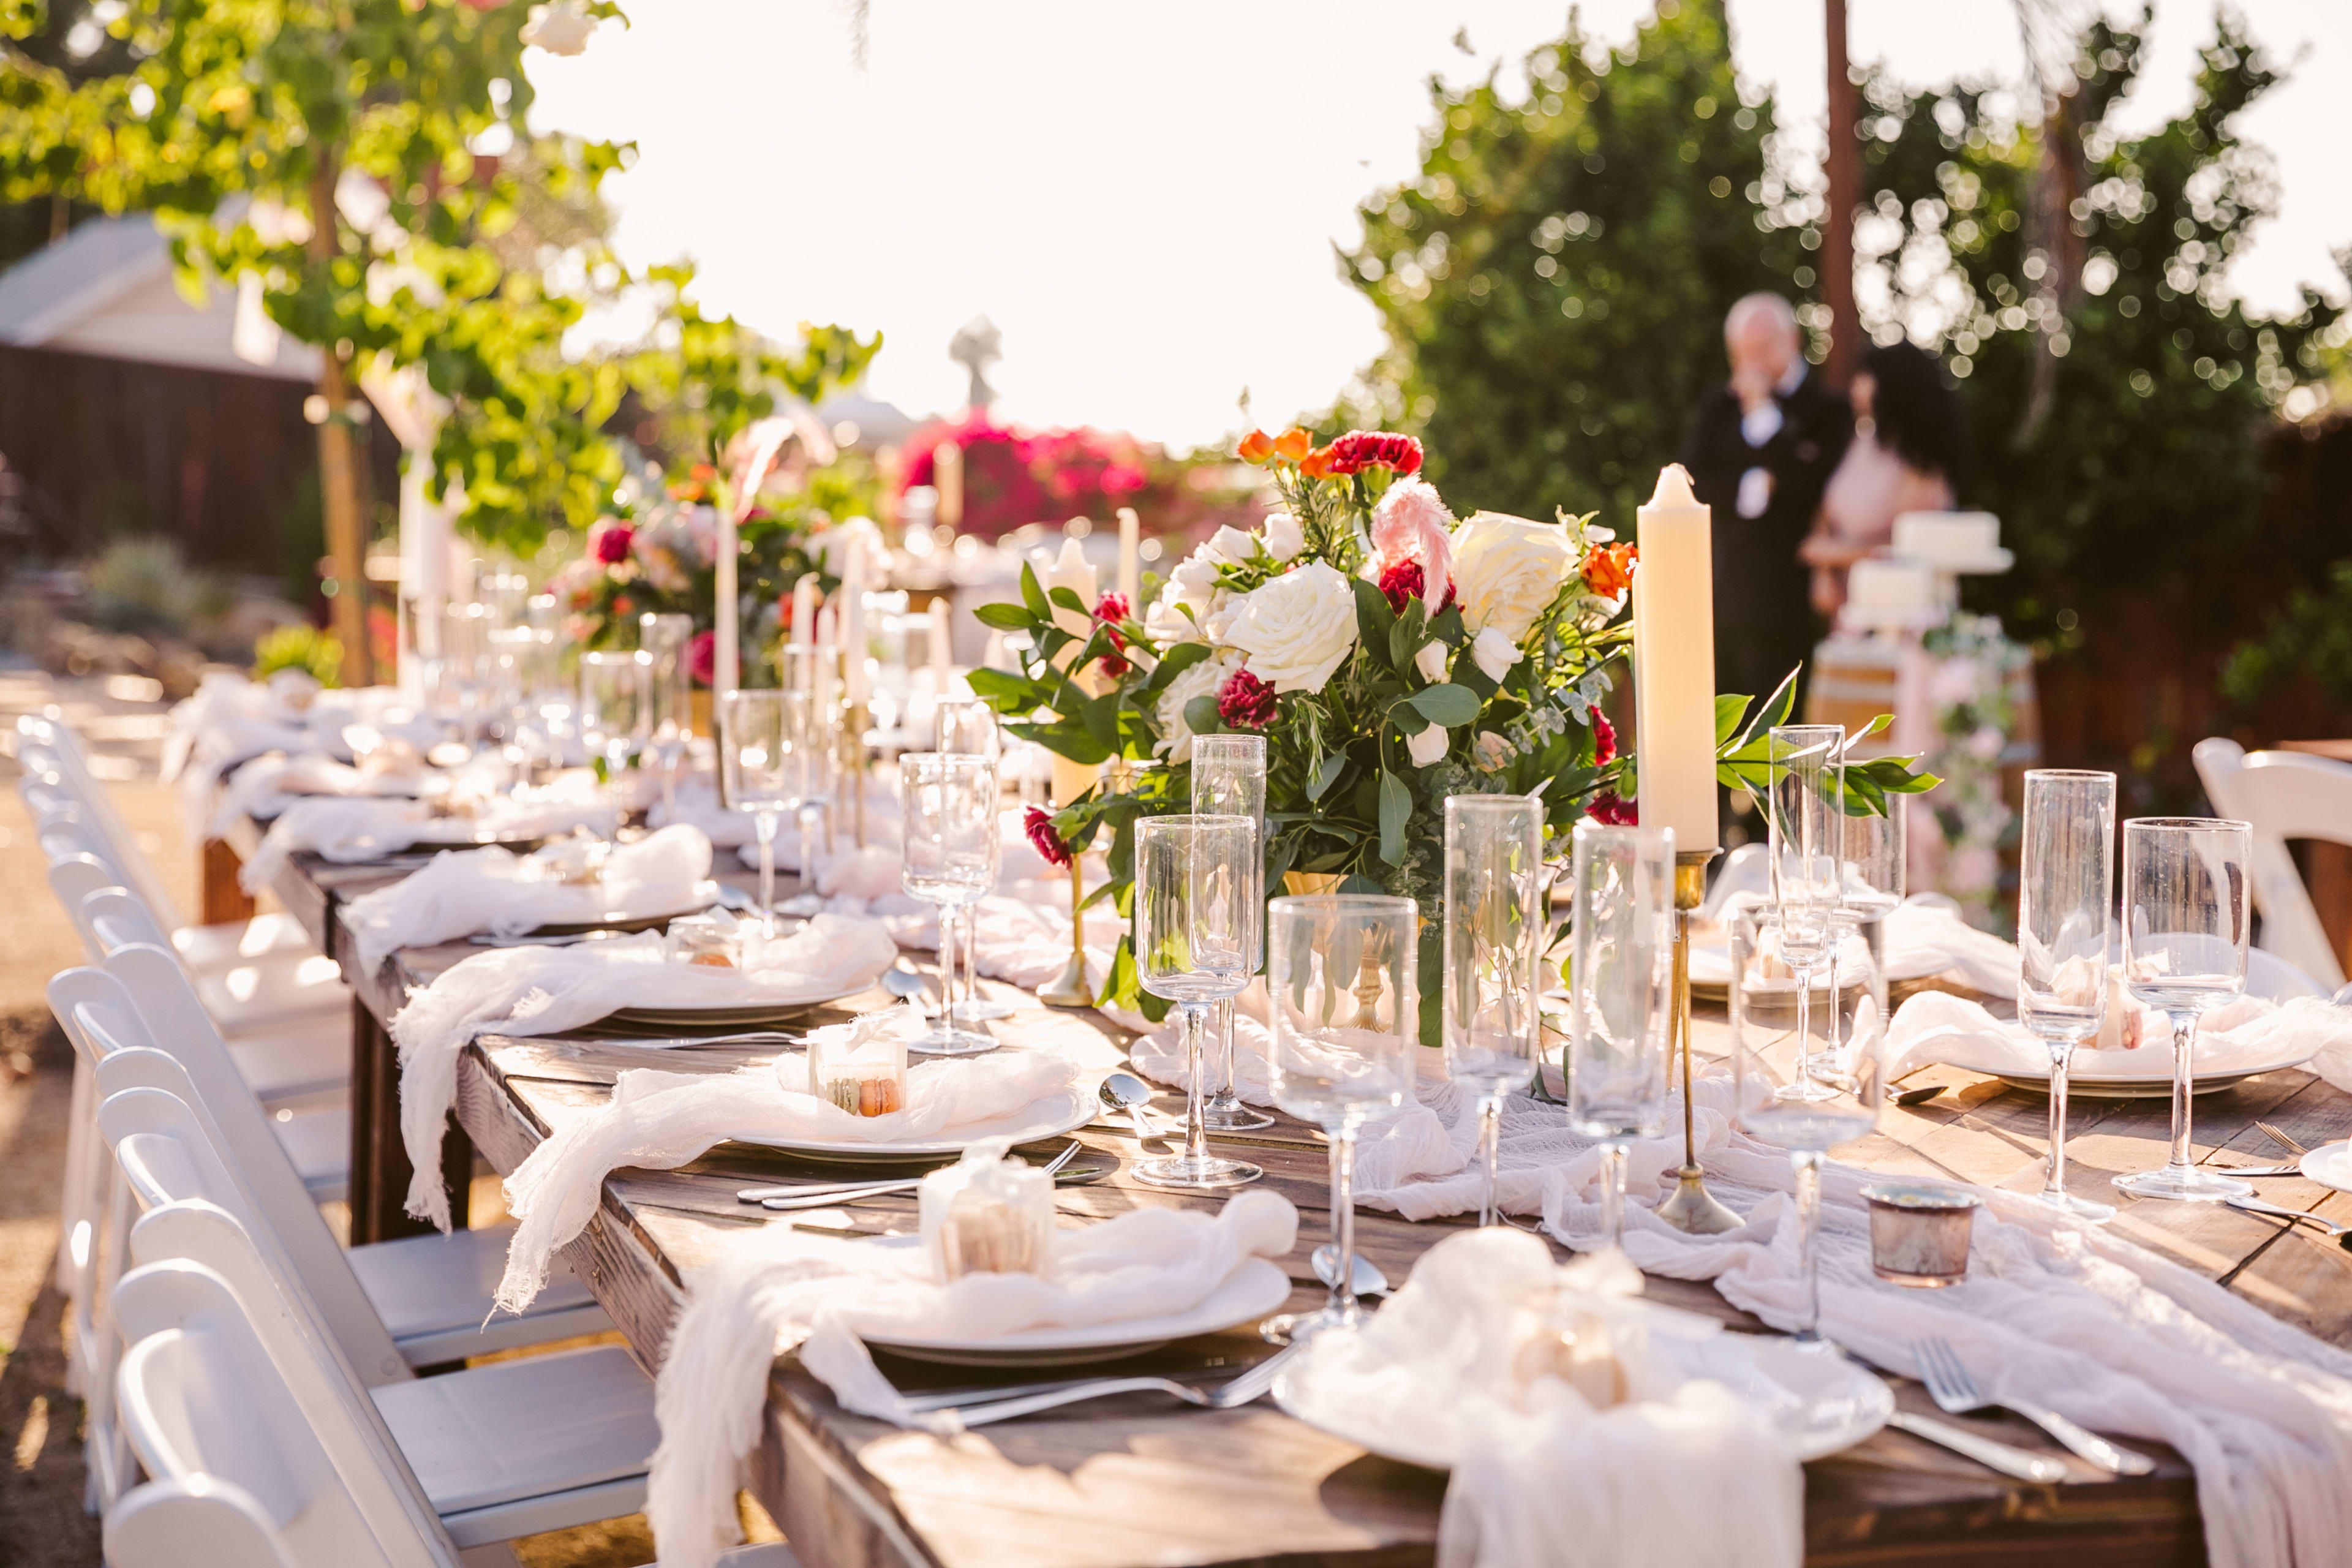 10 Best Outdoor Wedding Venues for Rent in Hamilton, ON